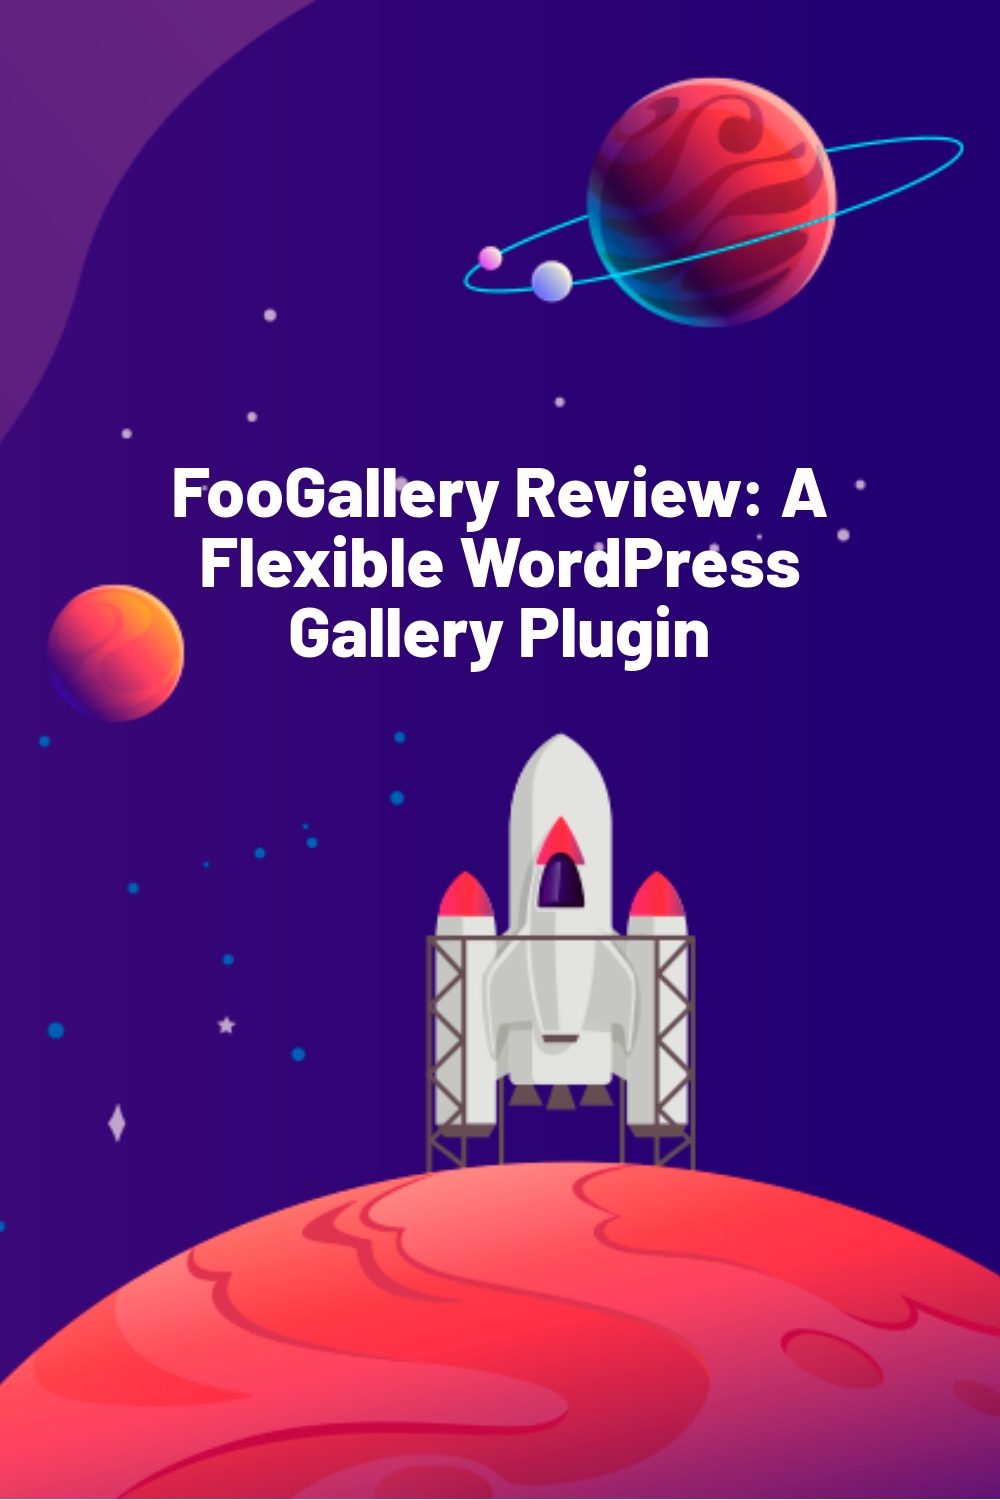 FooGallery Review: A Flexible WordPress Gallery Plugin